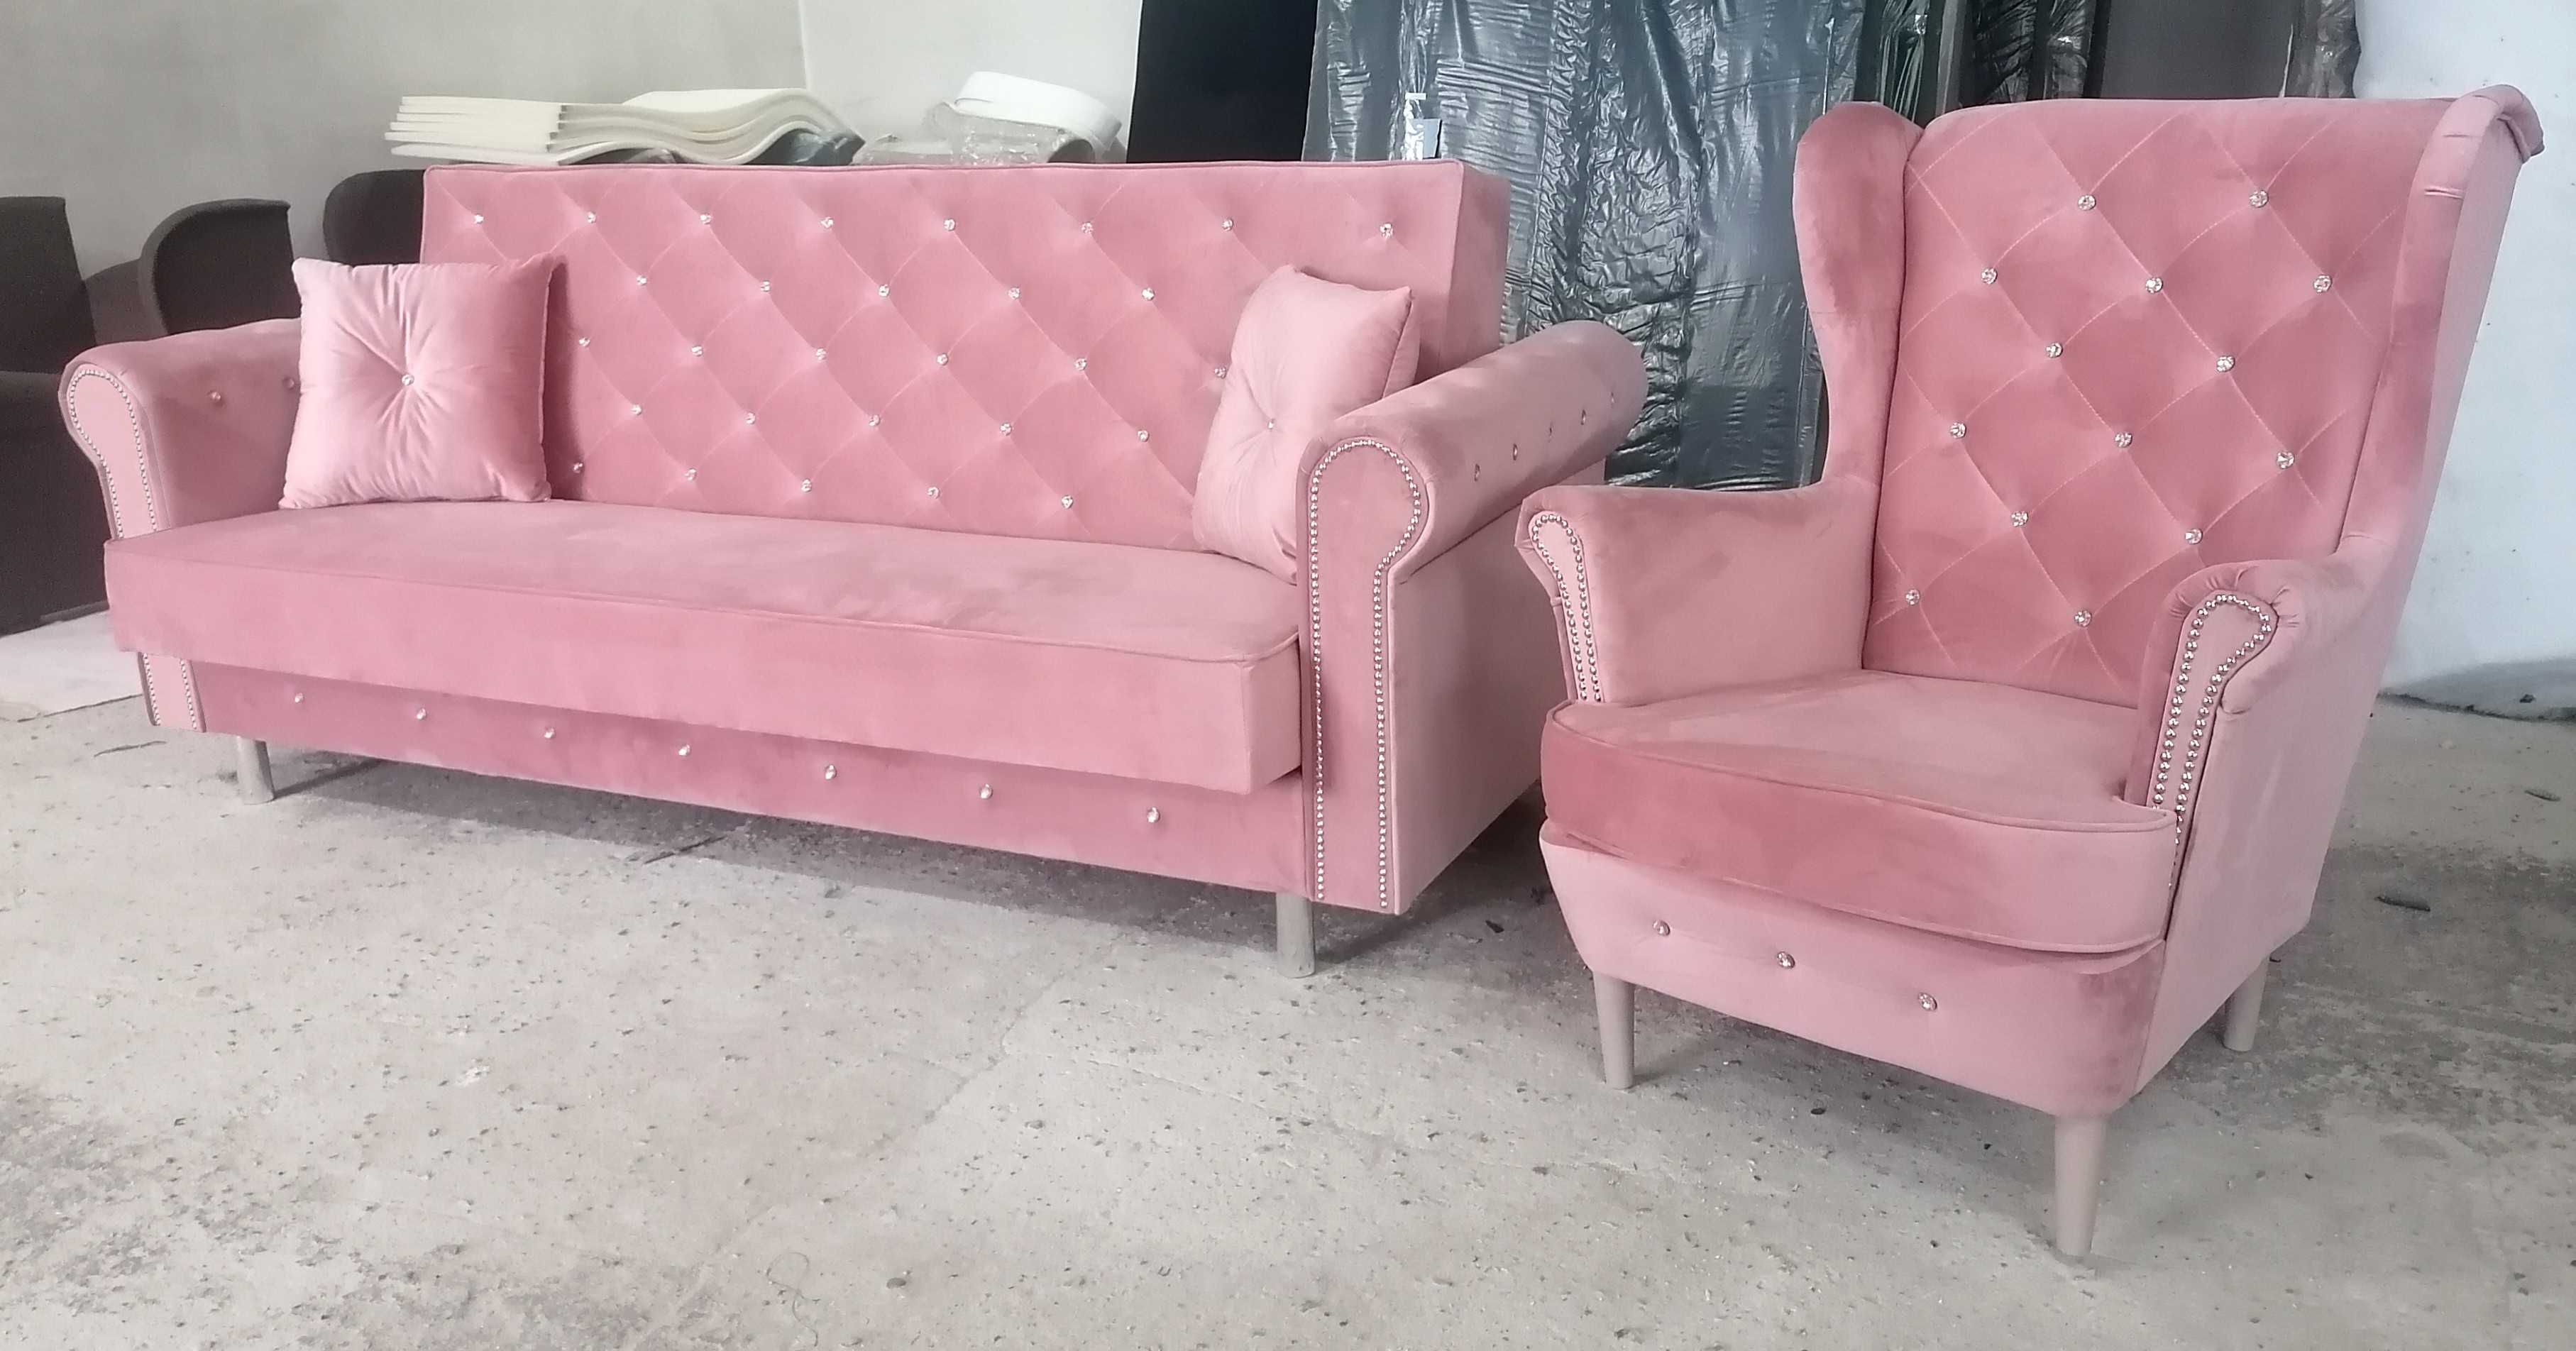 RATY zestaw Chesterfield komplet kanapa sofa fotel uszak pufa Glamour